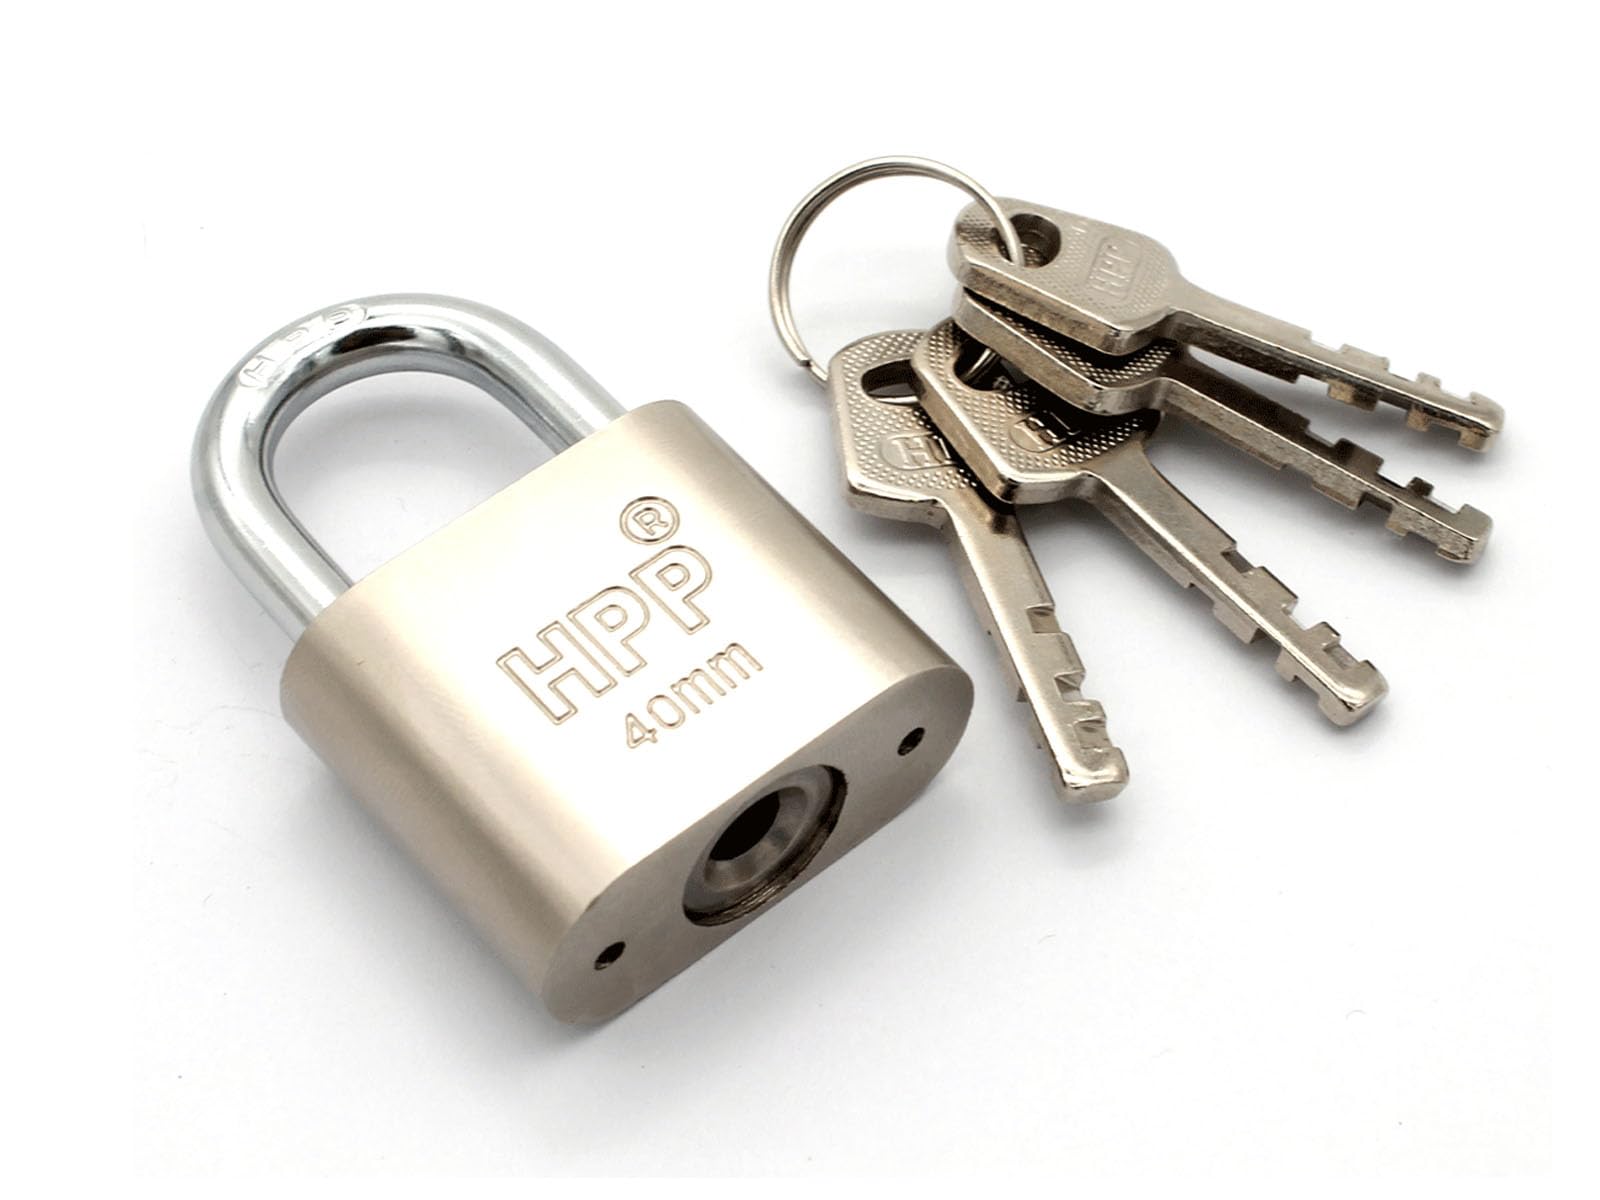 A lock or padlock image.